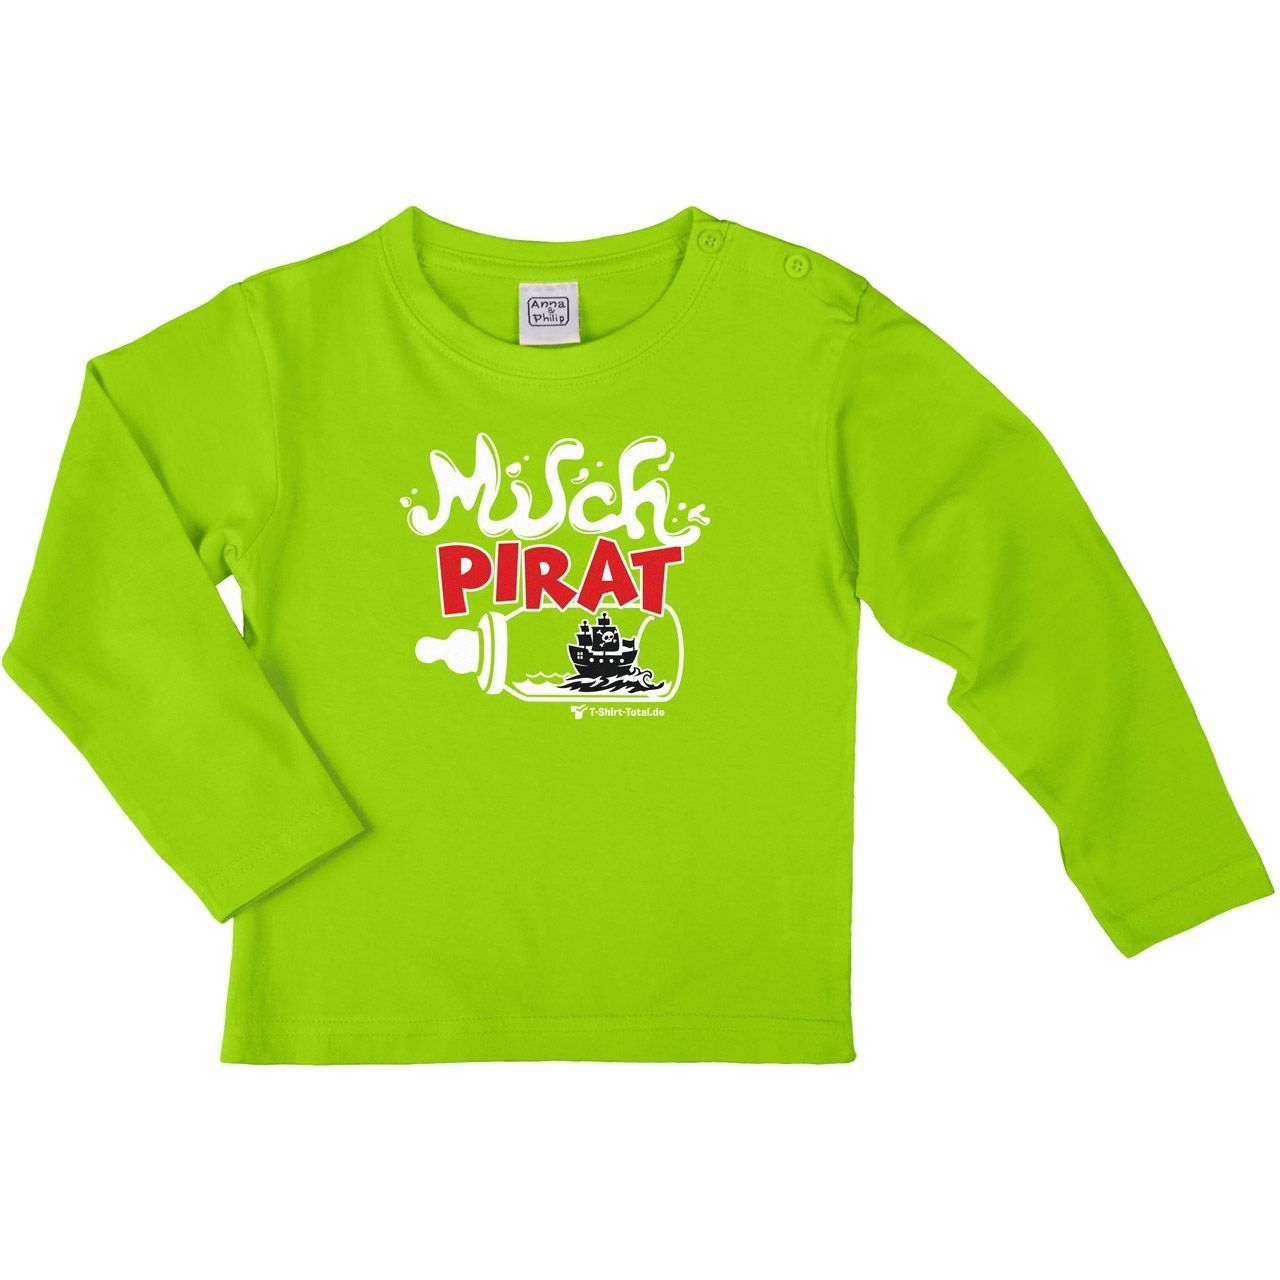 Milch Pirat Kinder Langarm Shirt hellgrün 68 / 74